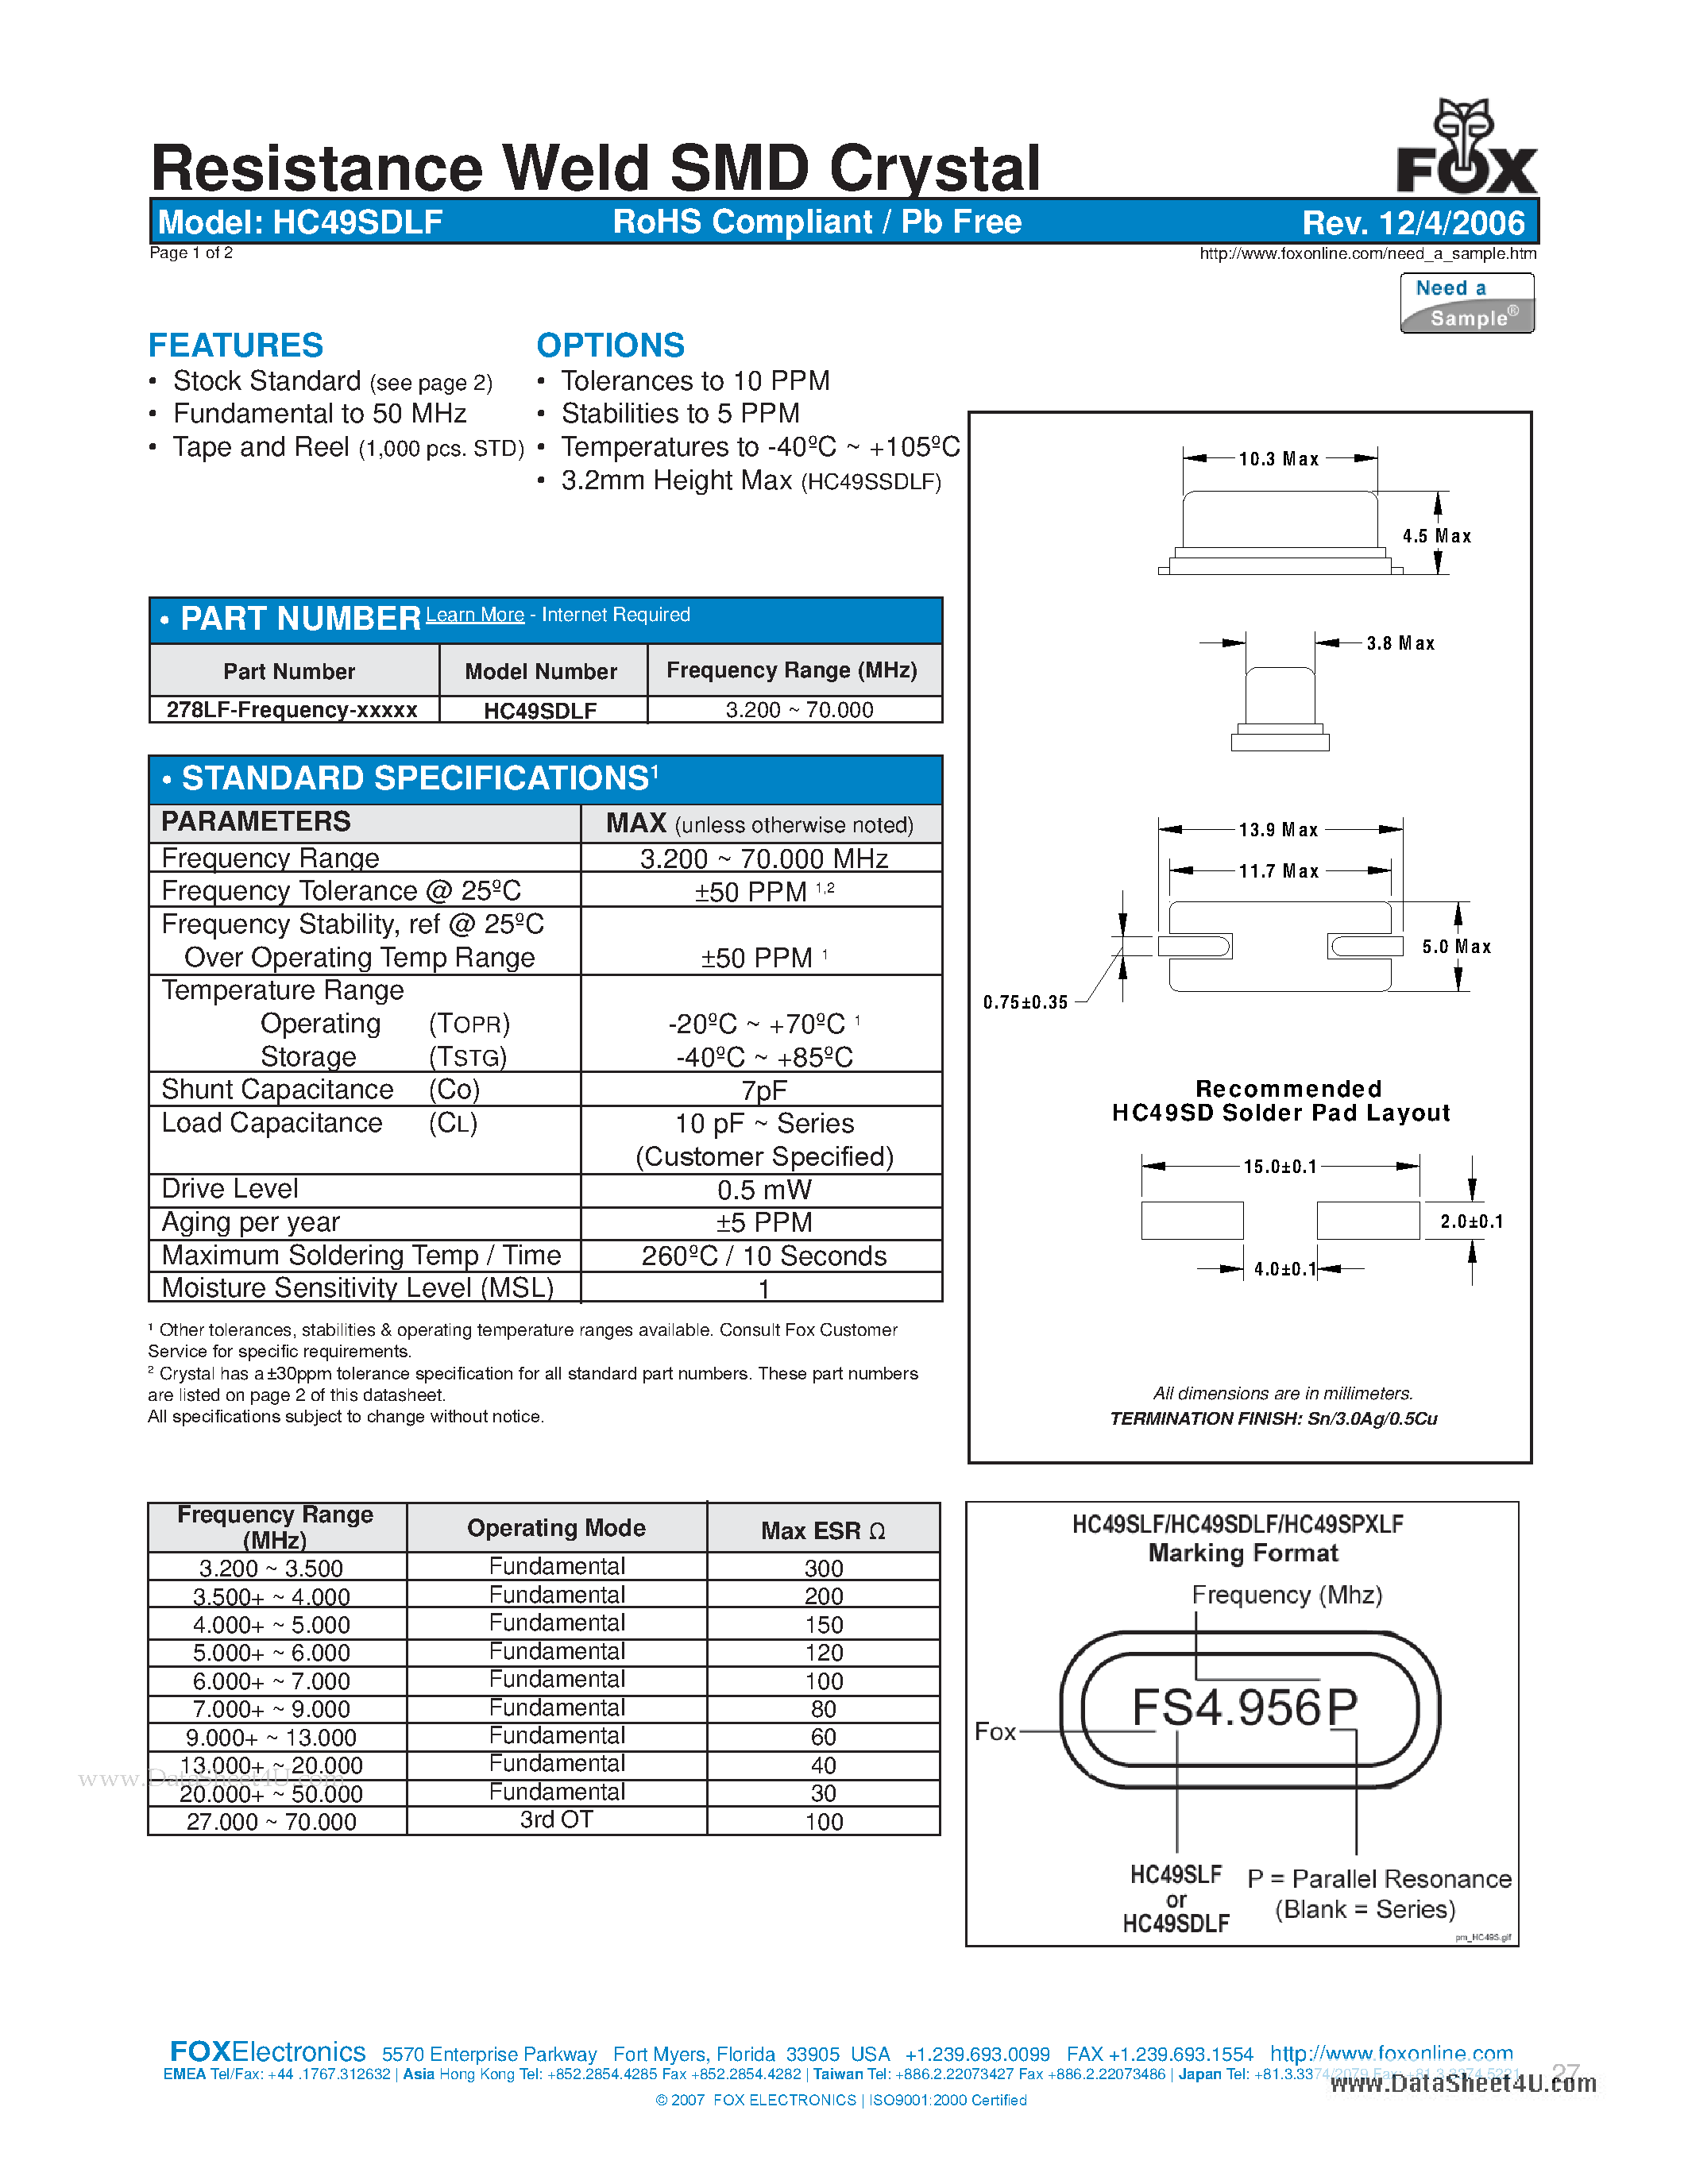 Datasheet 278LF-6-14 - Crystal page 1